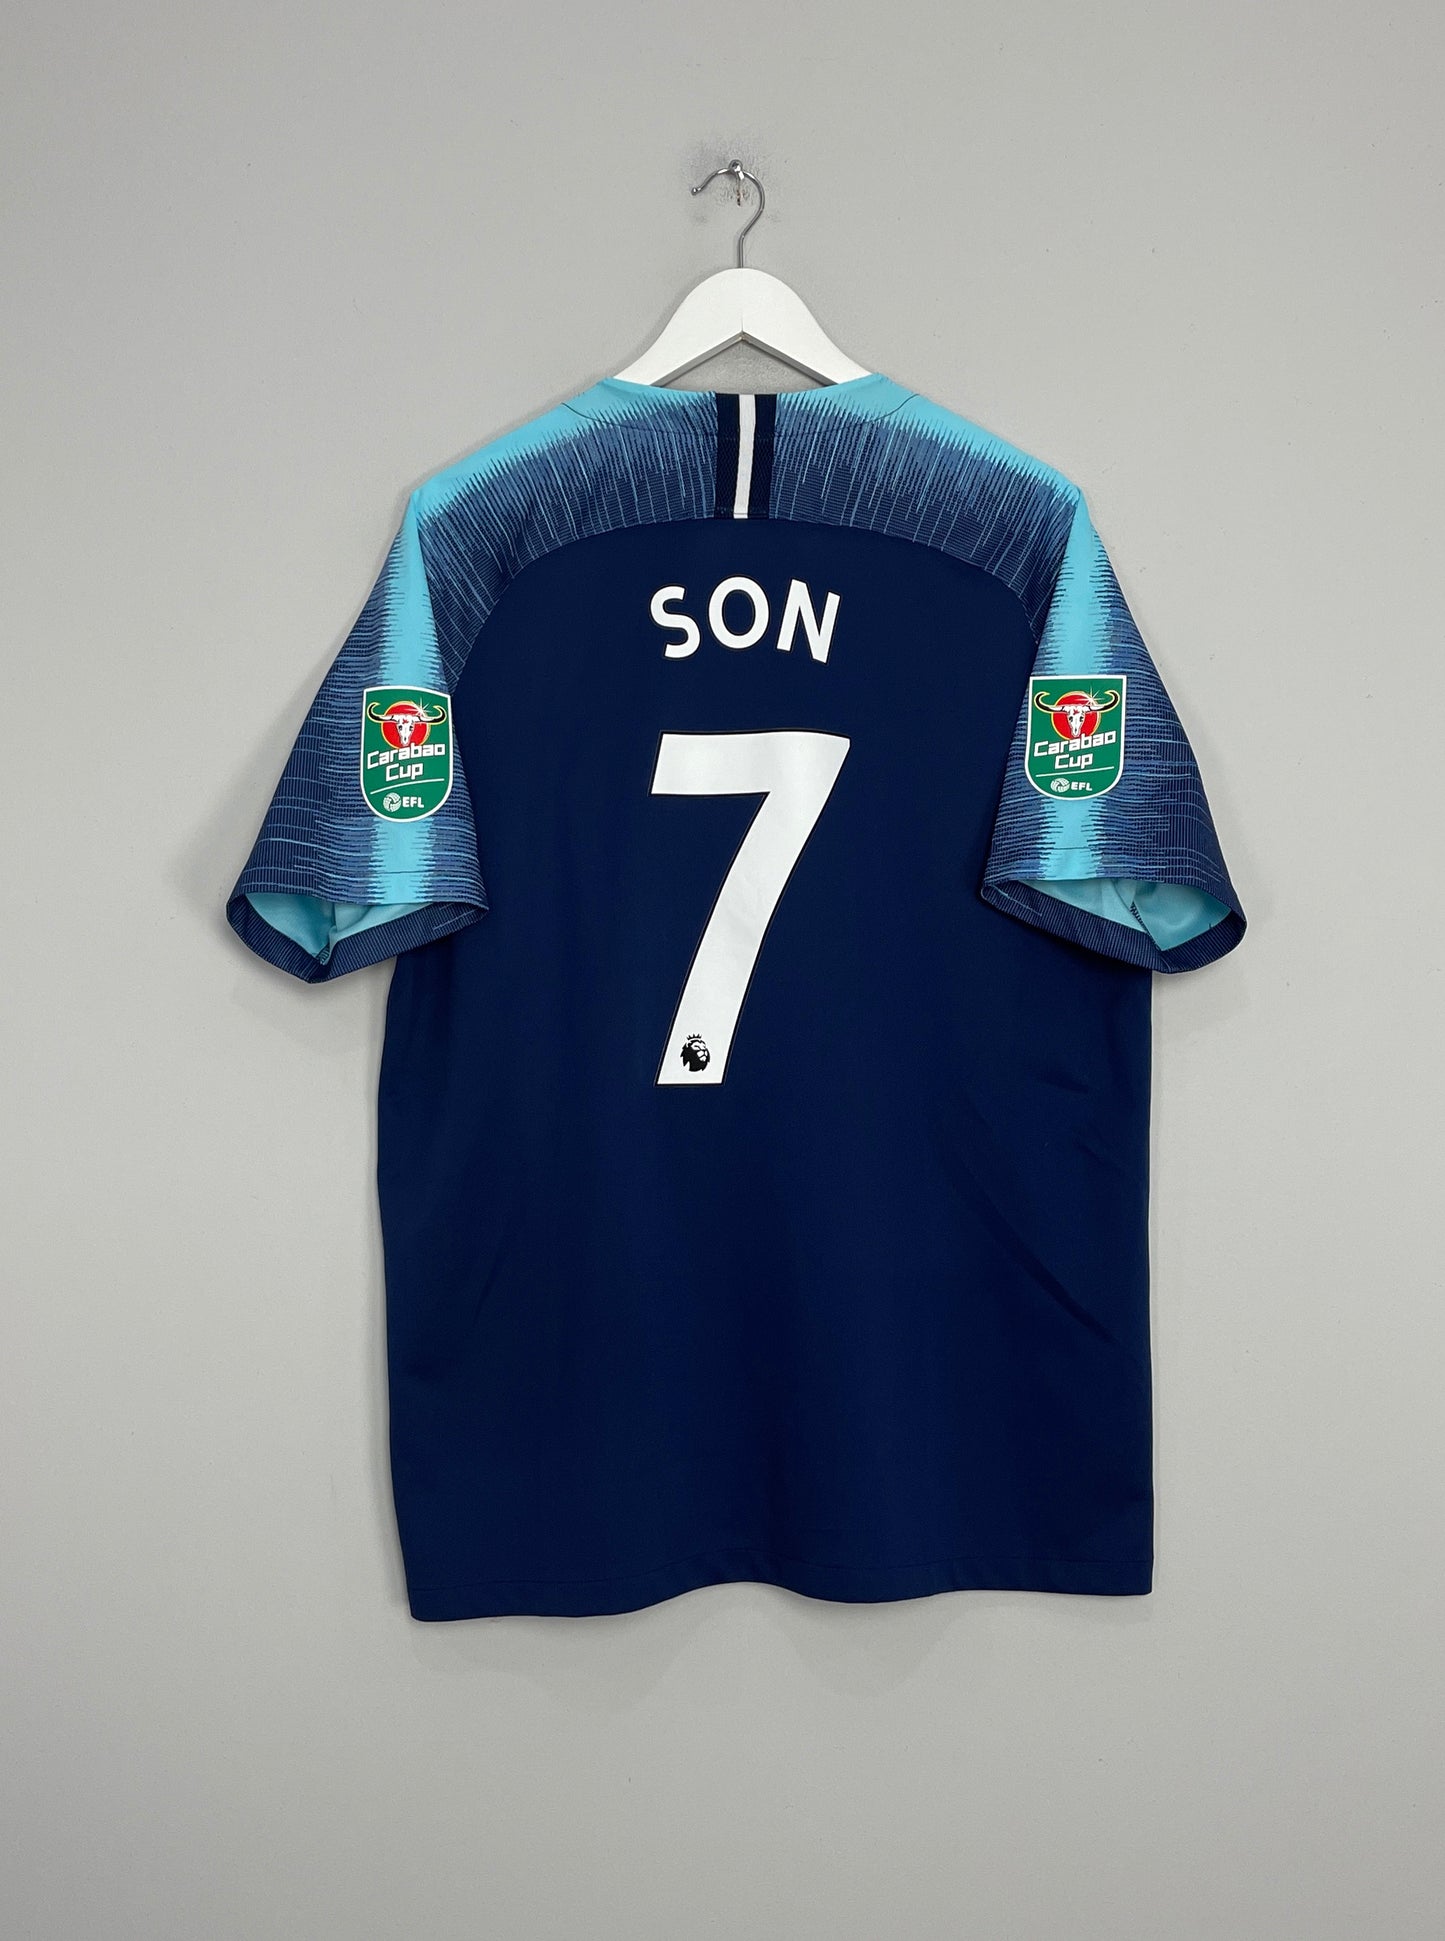 Image of the Tottenham Son shirt from the 2018/19 season